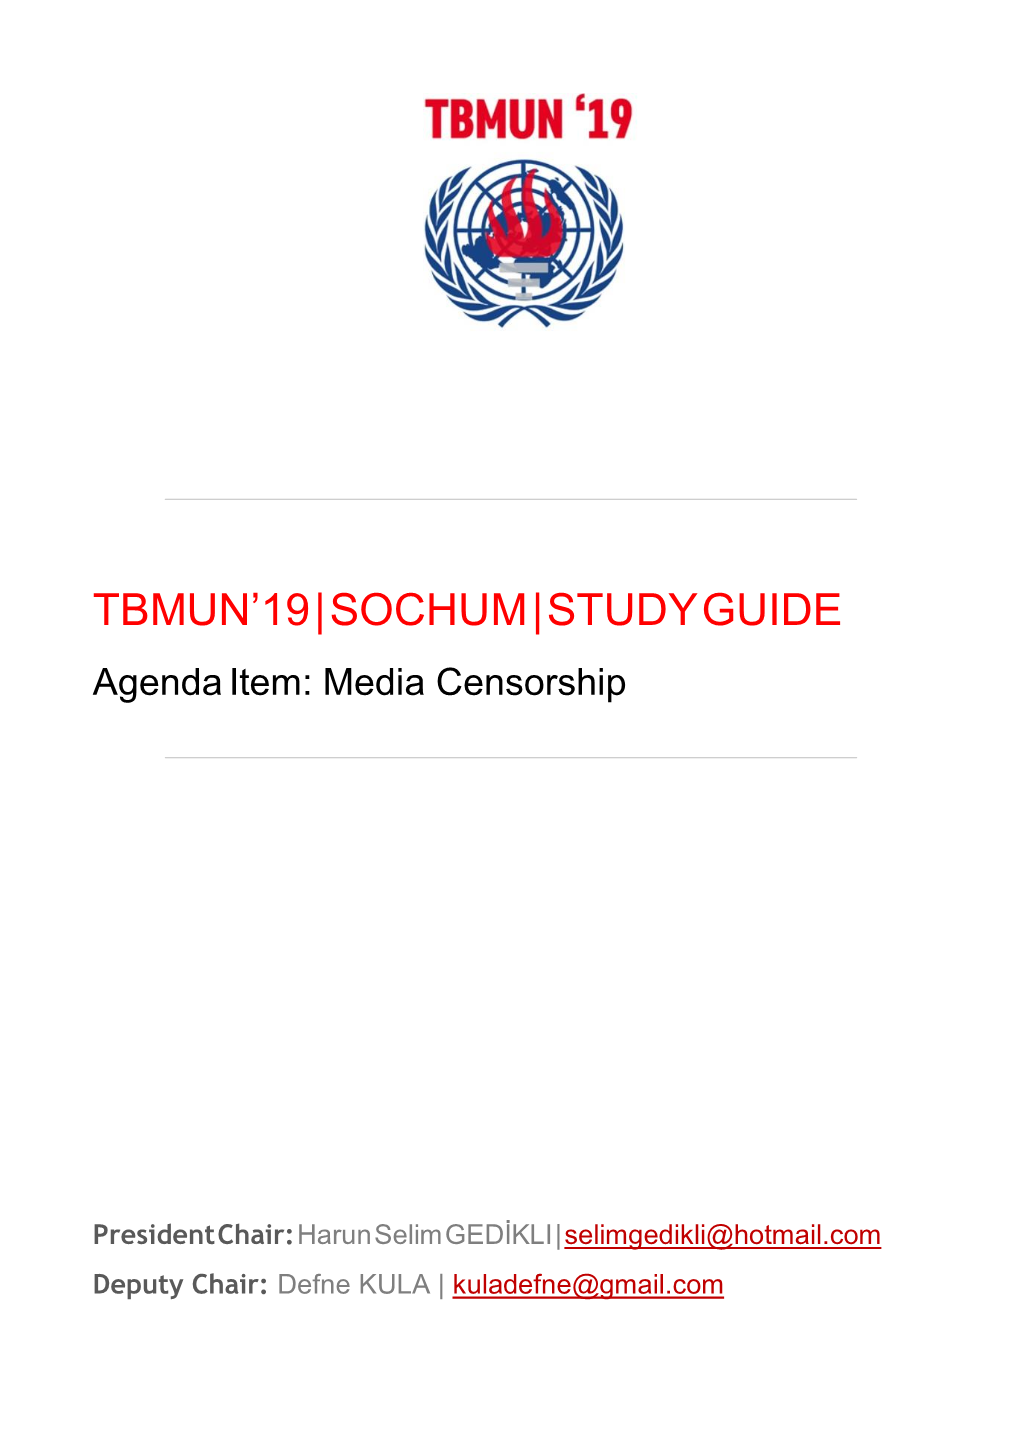 SOCHUM | STUDY GUIDE Agenda Item: Media Censorship